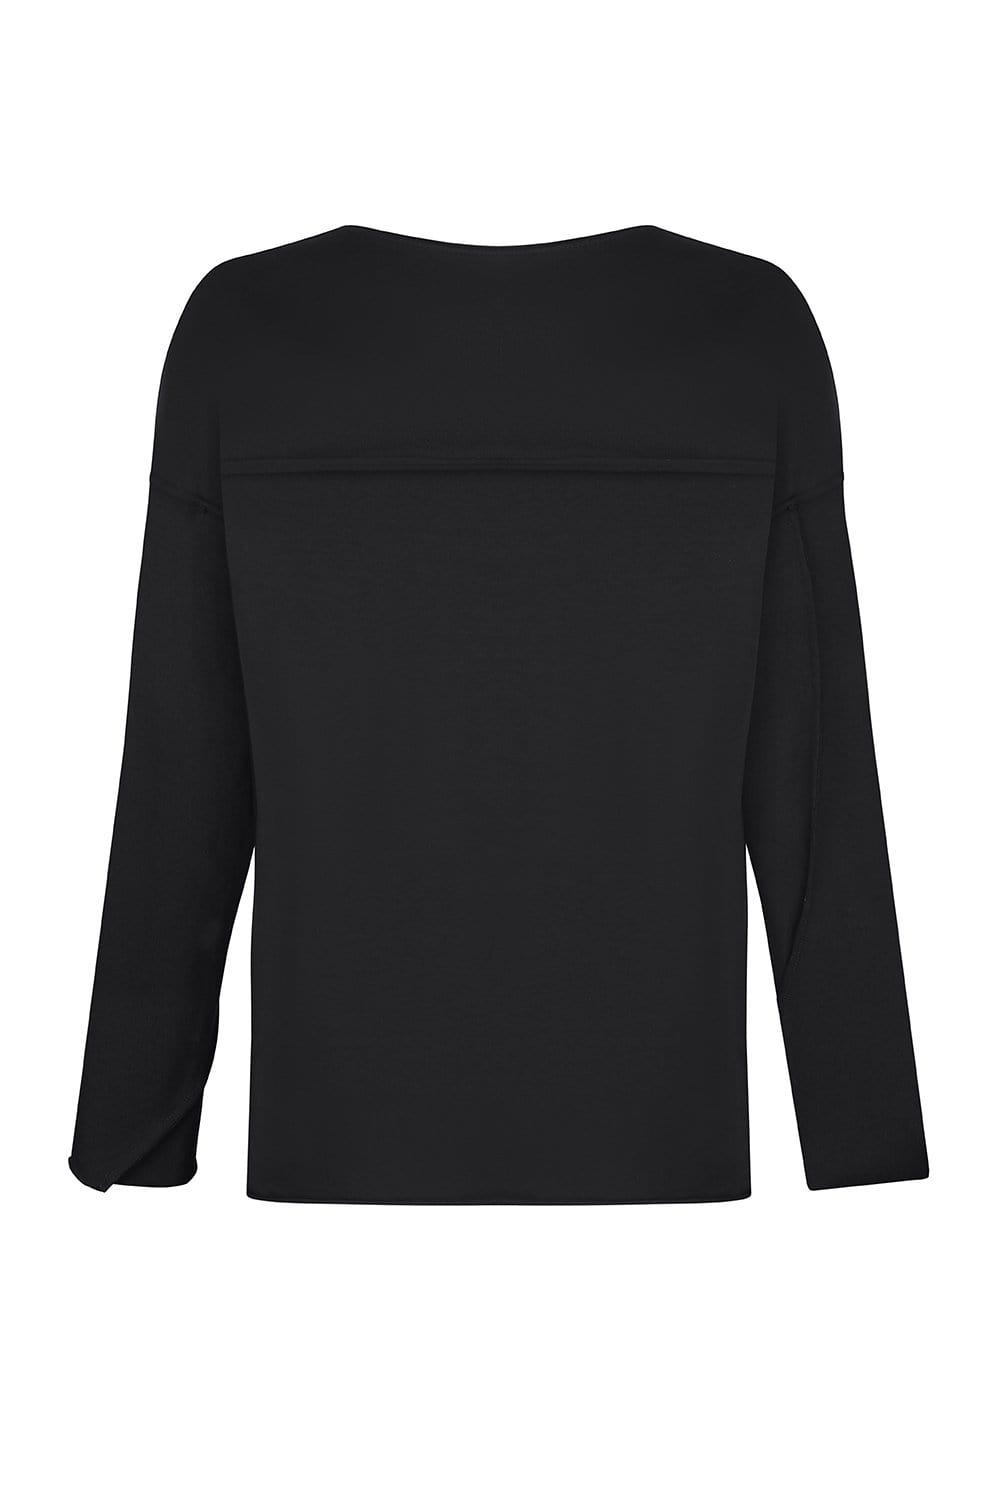 MDNT45 Tops & T-shirts Black longsleeve Diving